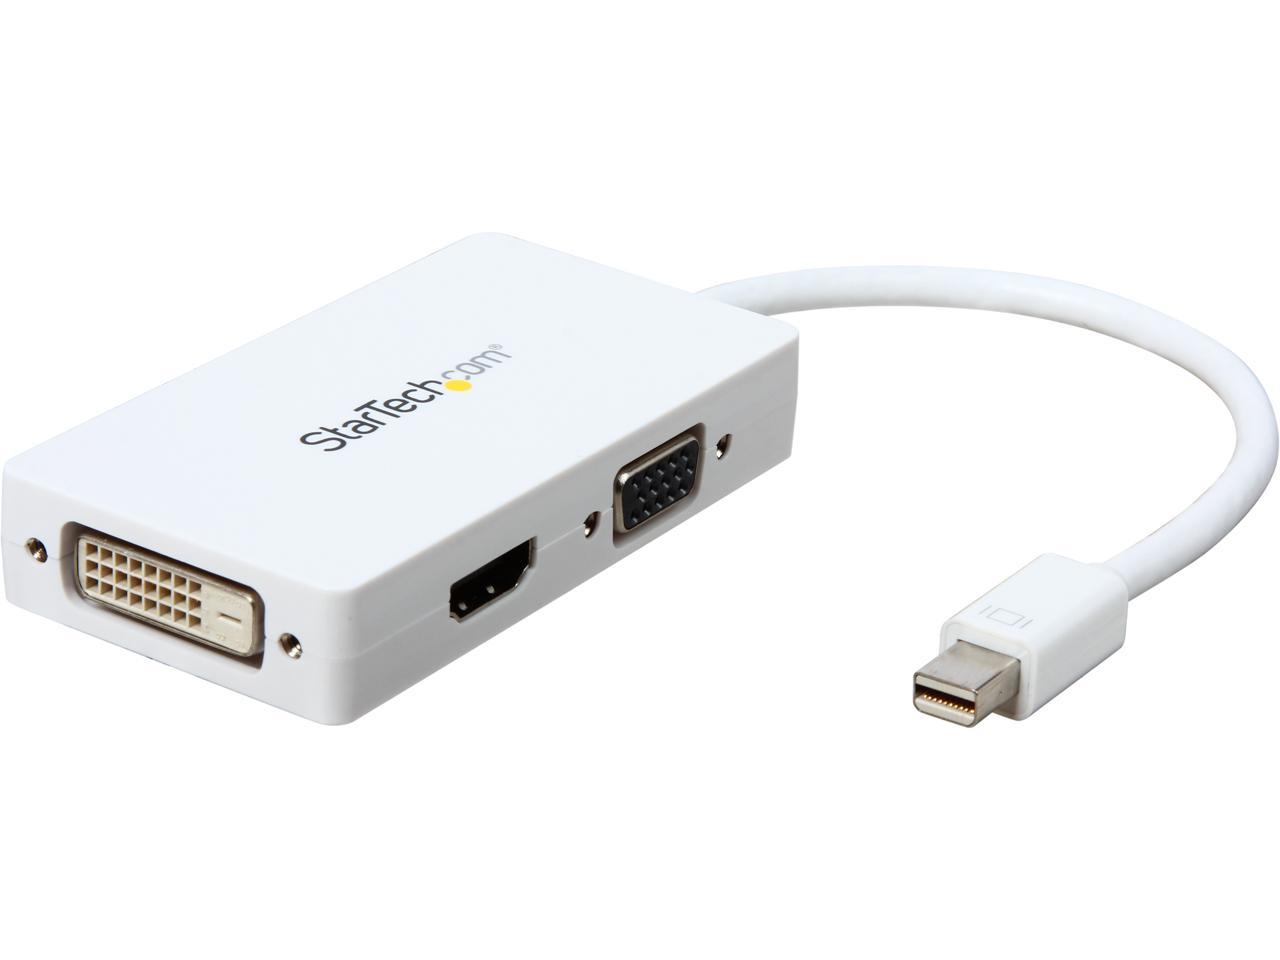 StarTech.com MDP2VGDVHDW Travel A/V Adapter: 3-in-1 Mini DisplayPort to VGA DVI or HDMI Converter - White